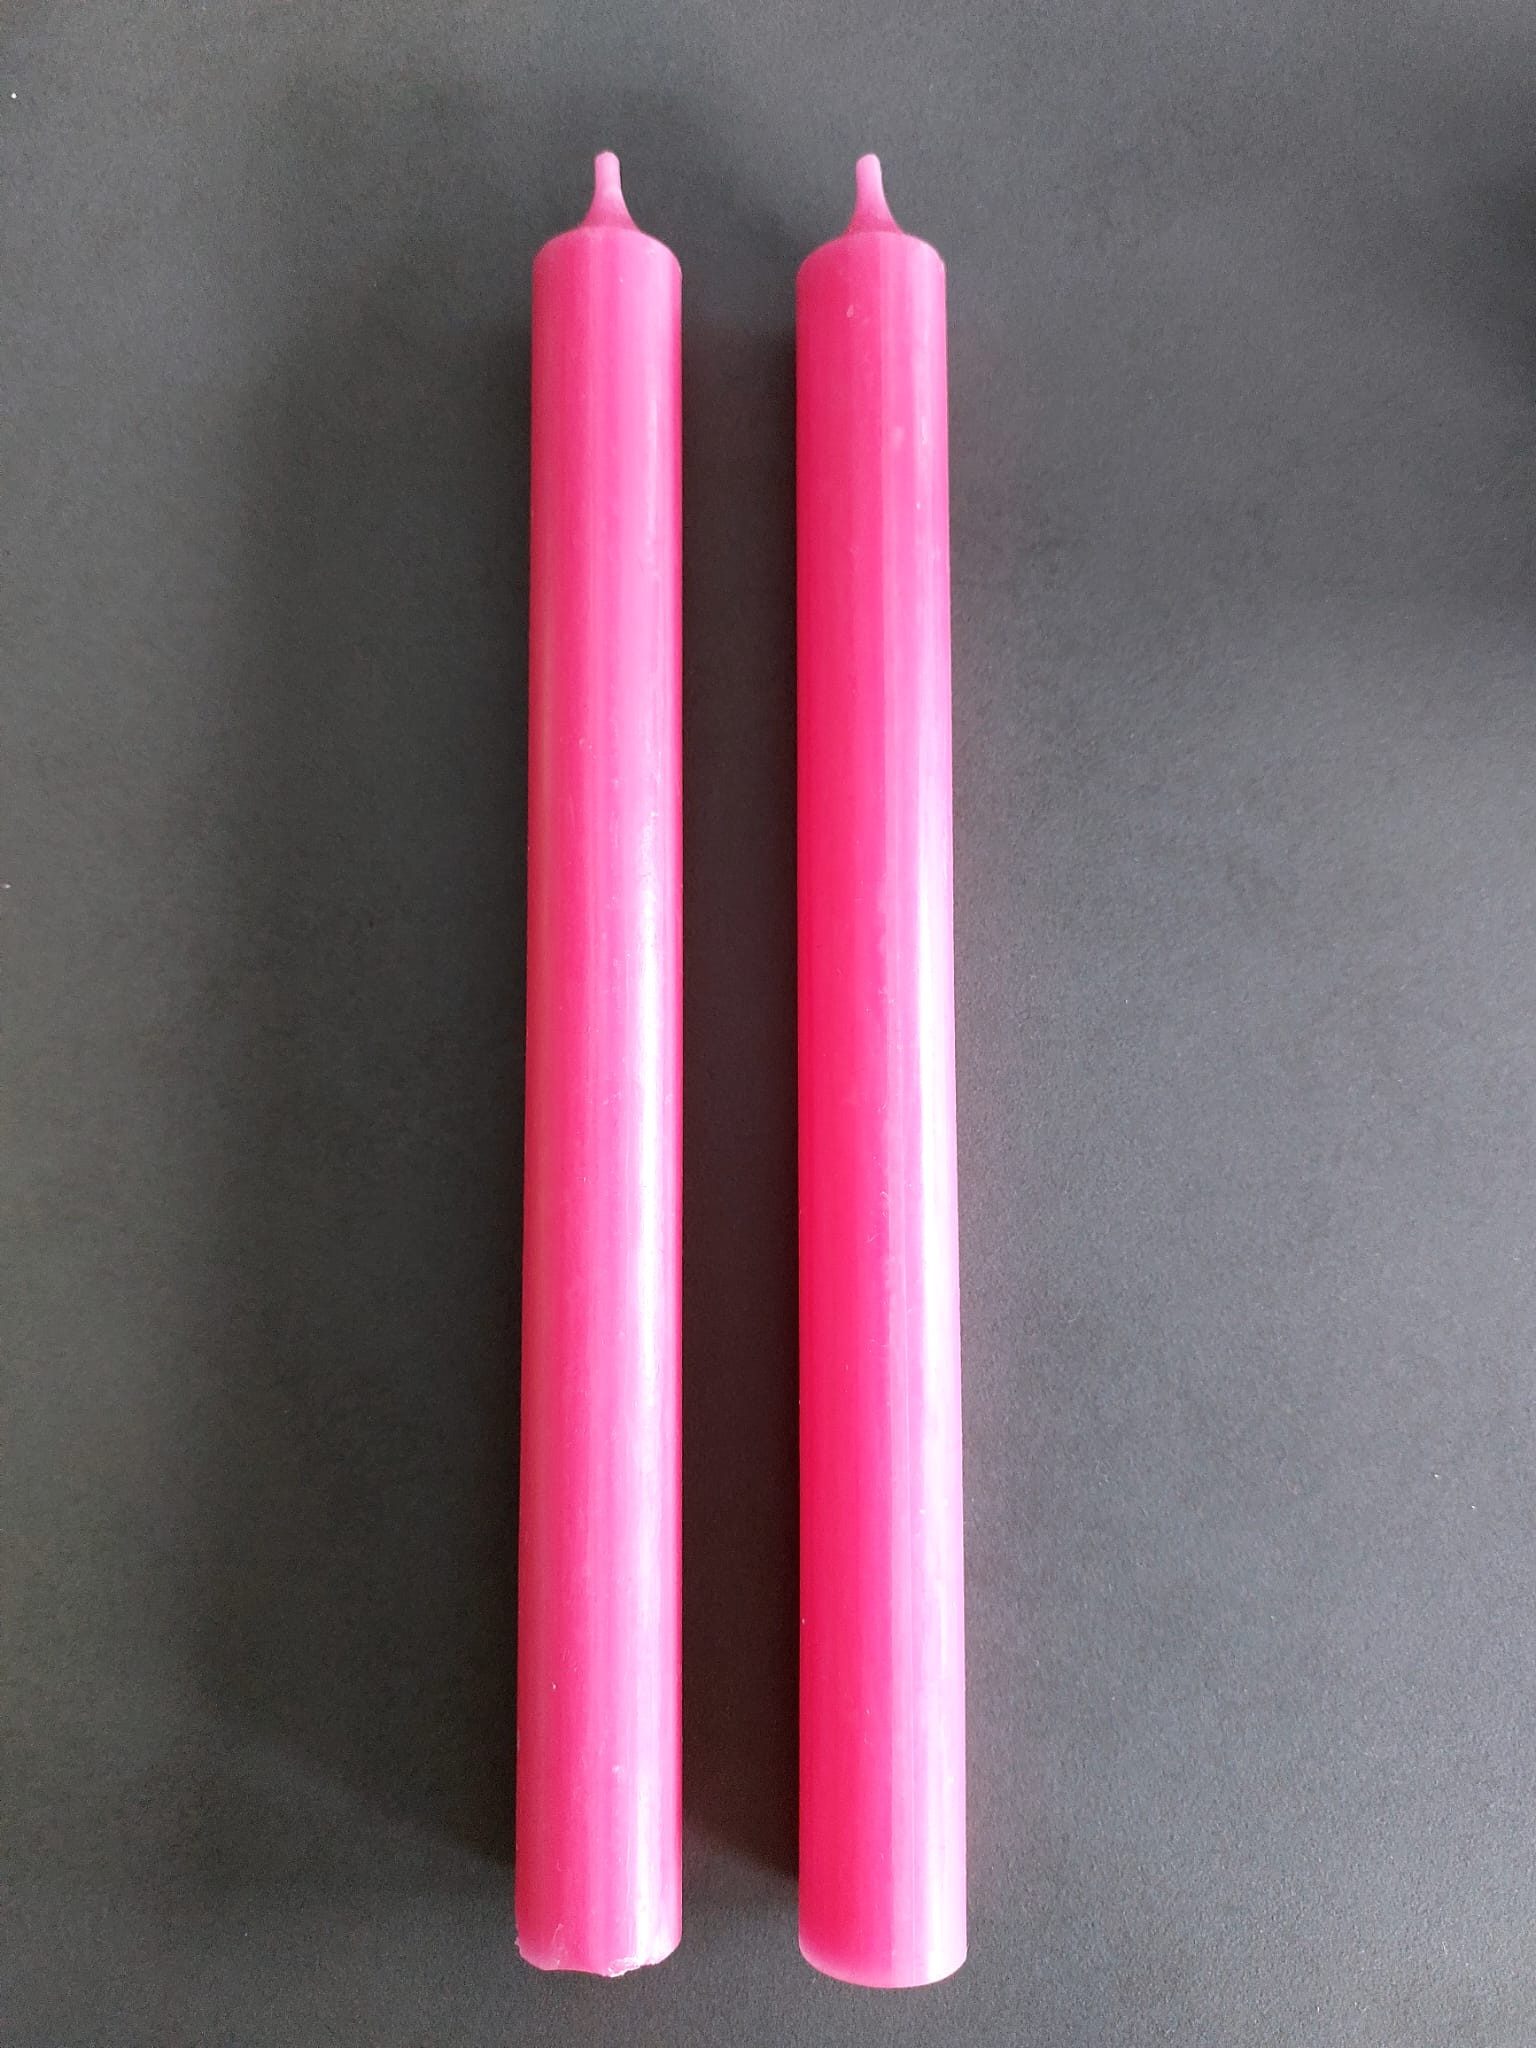 meytrade Tafelkerze Stabkerzen extra lang Tischdeko pink rosa fuchsia Sommerdeko (2er Set mit 9 Stunden Brenndauer je Kerze)